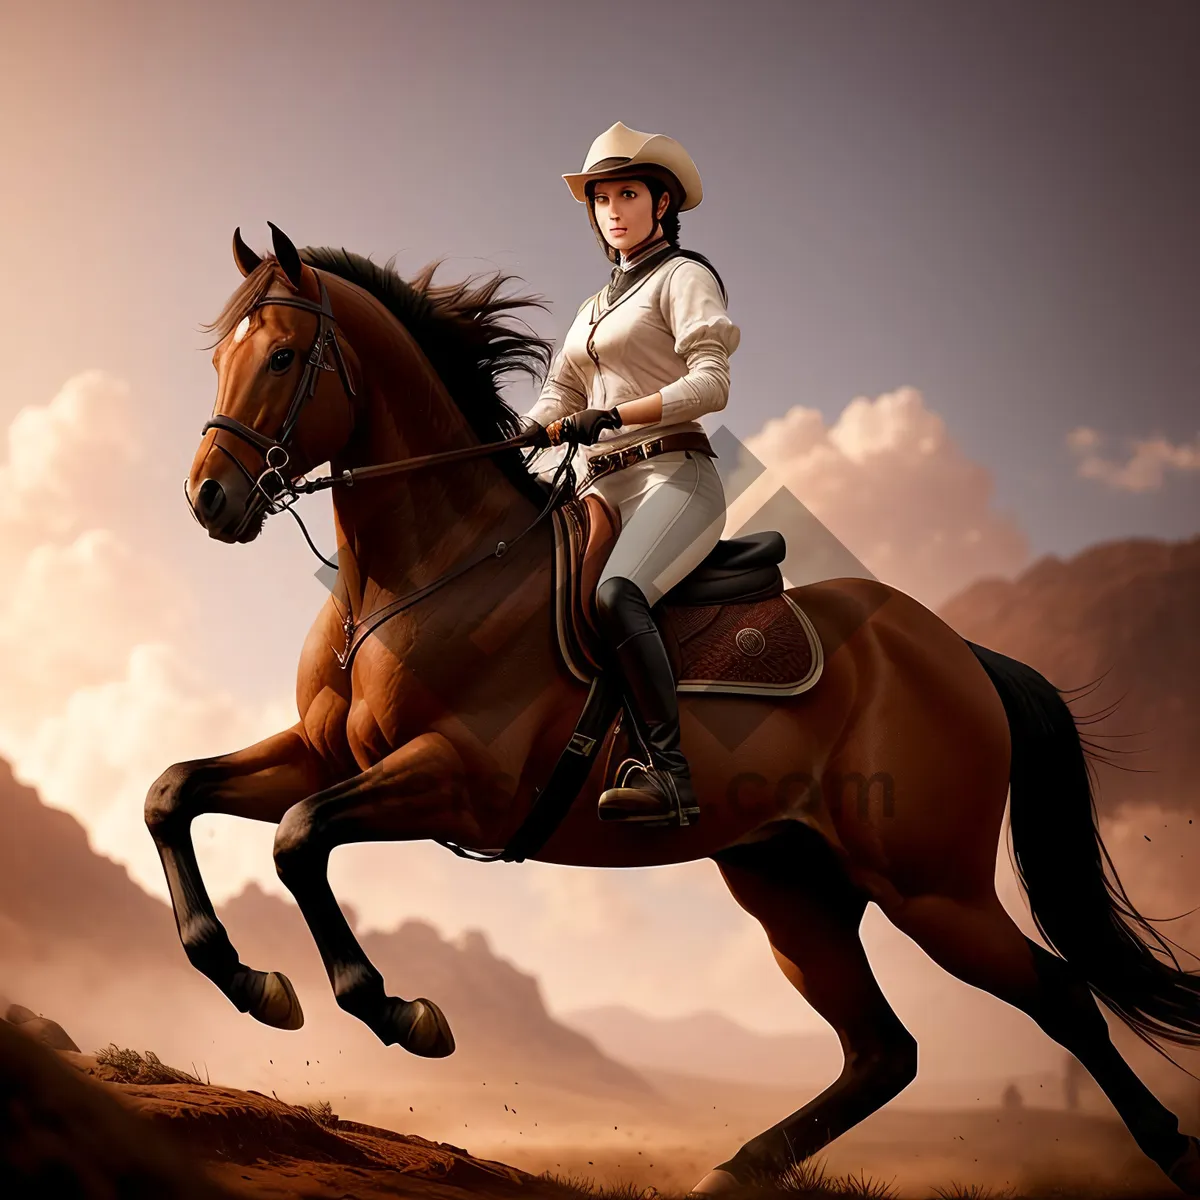 Picture of Exhilarating Equestrian Ride: Horseback Joyride with Jockey